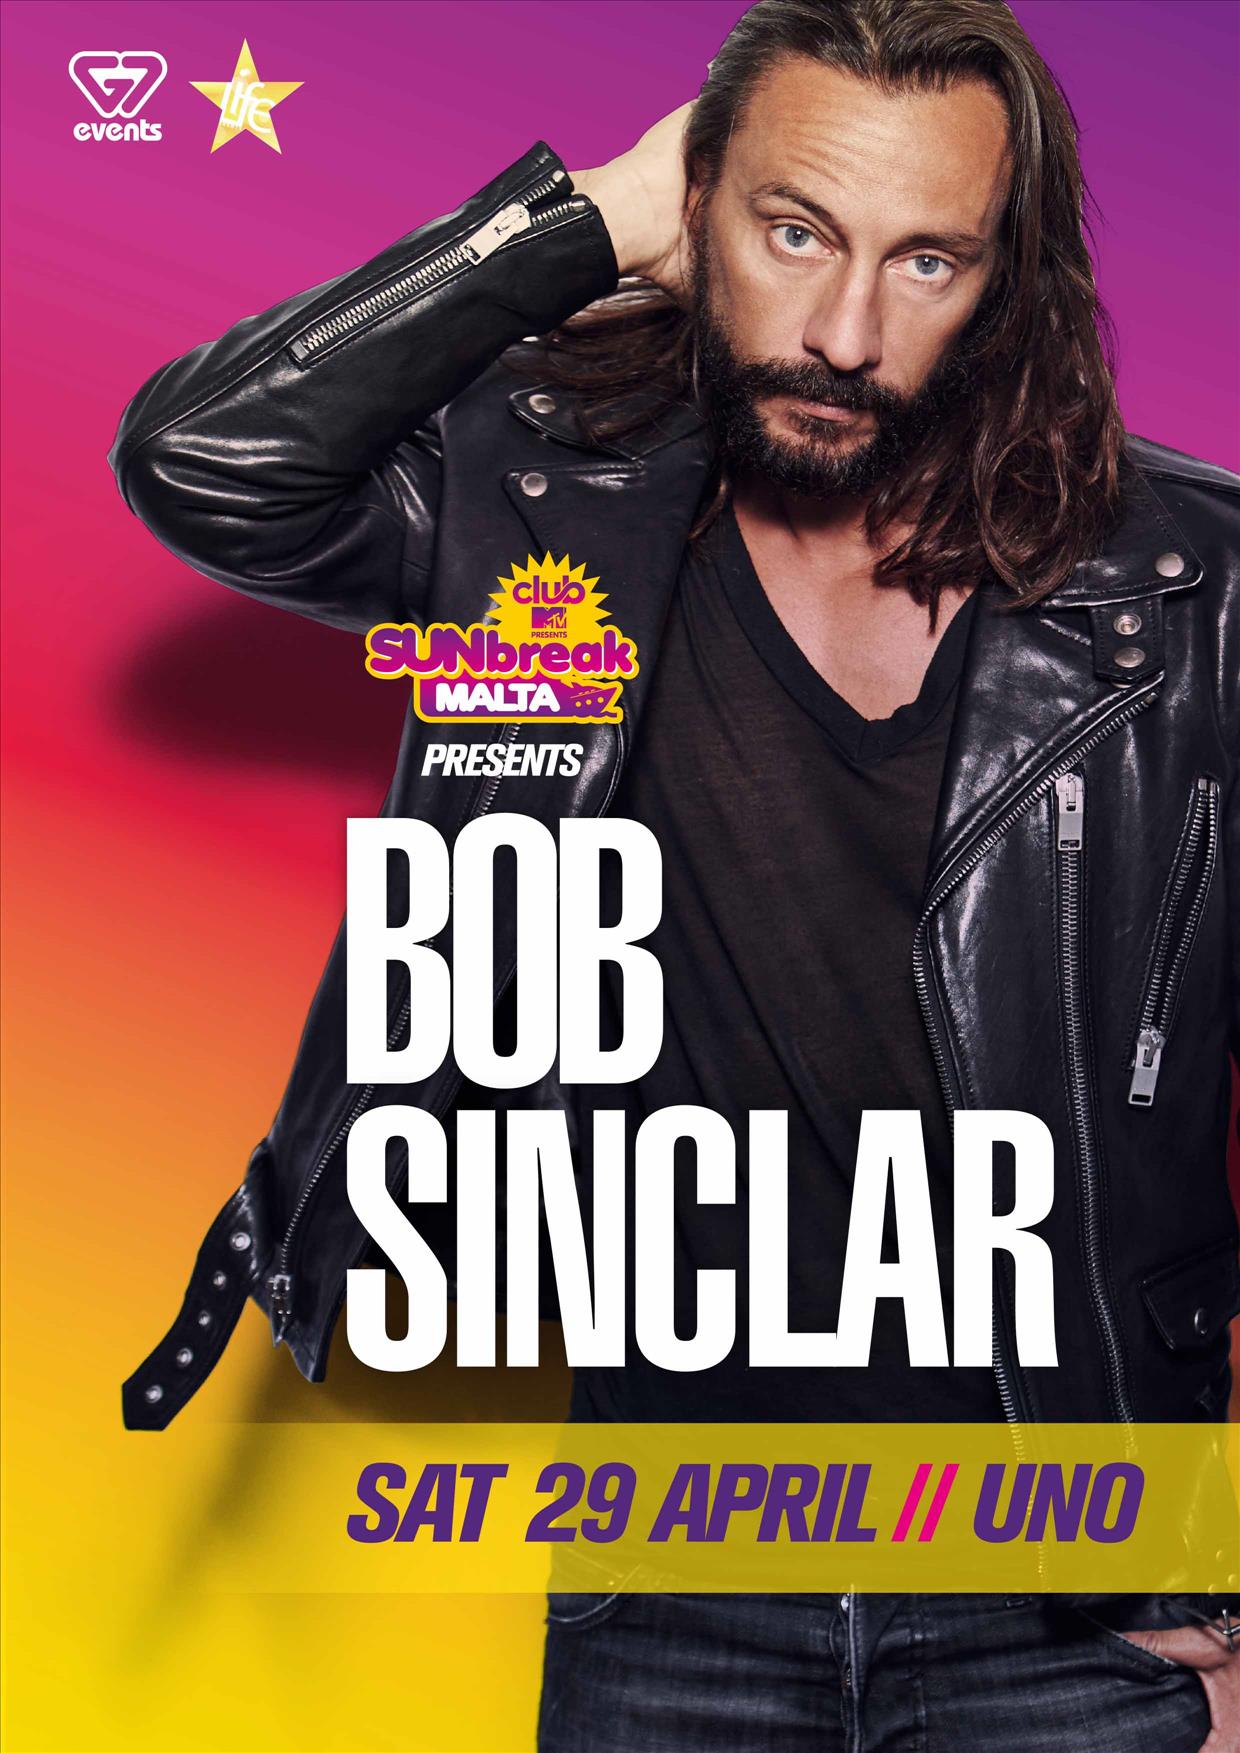 Sunbreak Malta Club MTV Present BOB SINCLAR at UNO poster